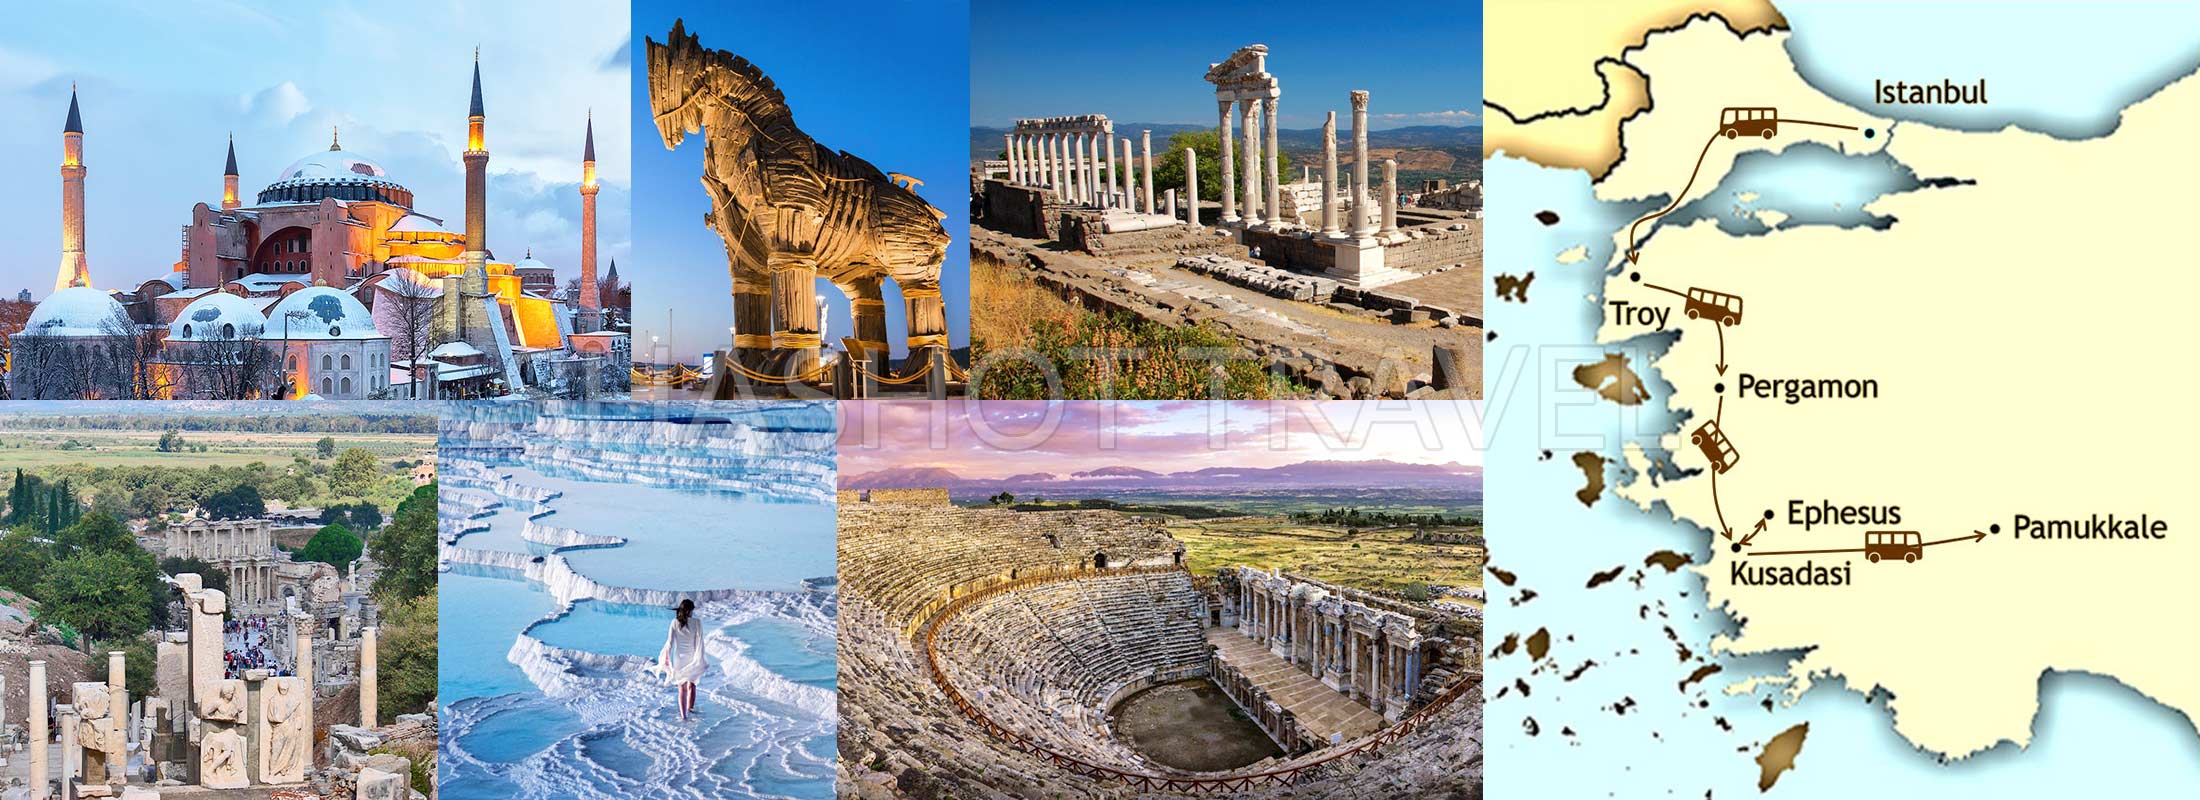 turkey-package-tours-6-days-troy-pergamon-ephesus-virgin-mary-house-pamukkale-hierapolis-map